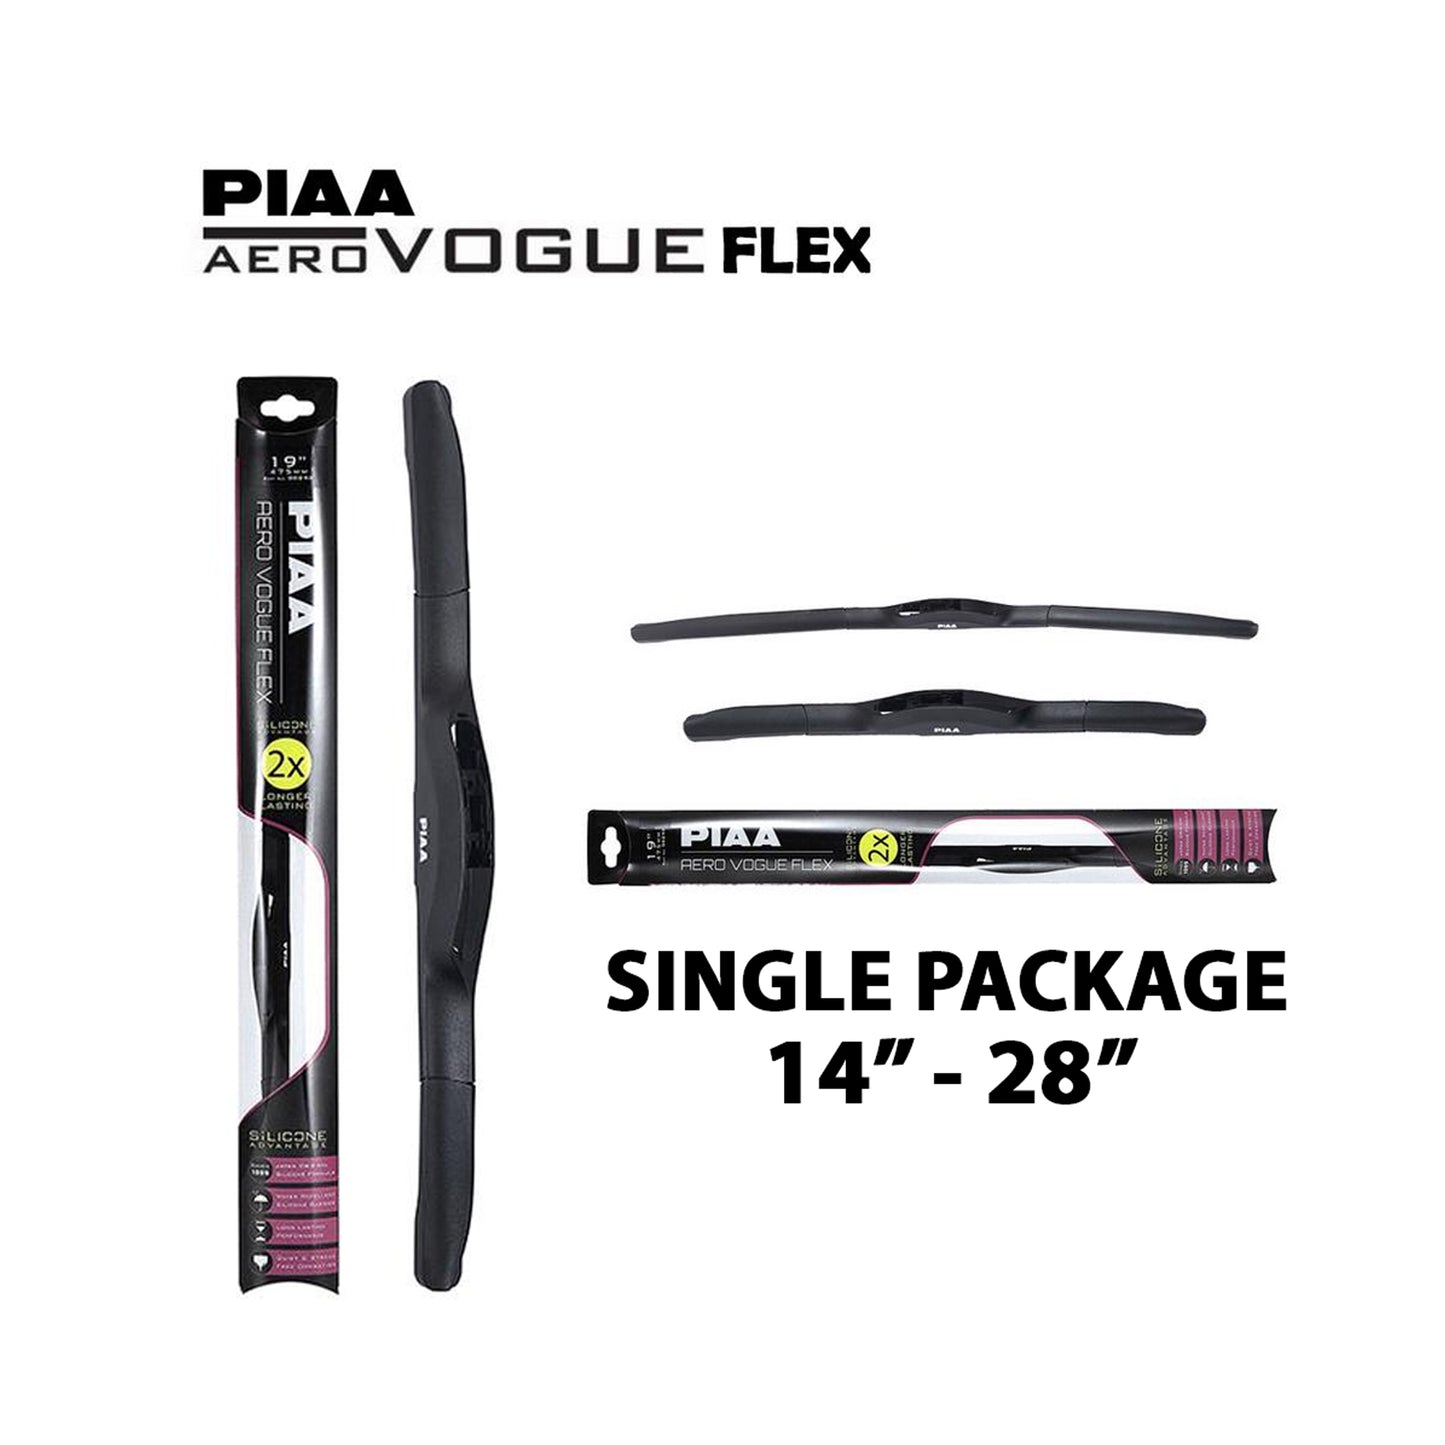 PIAA AERO VOGUE FLEX Car Wiper ( 14" ) - Black (Barcode: 4960311050902 )